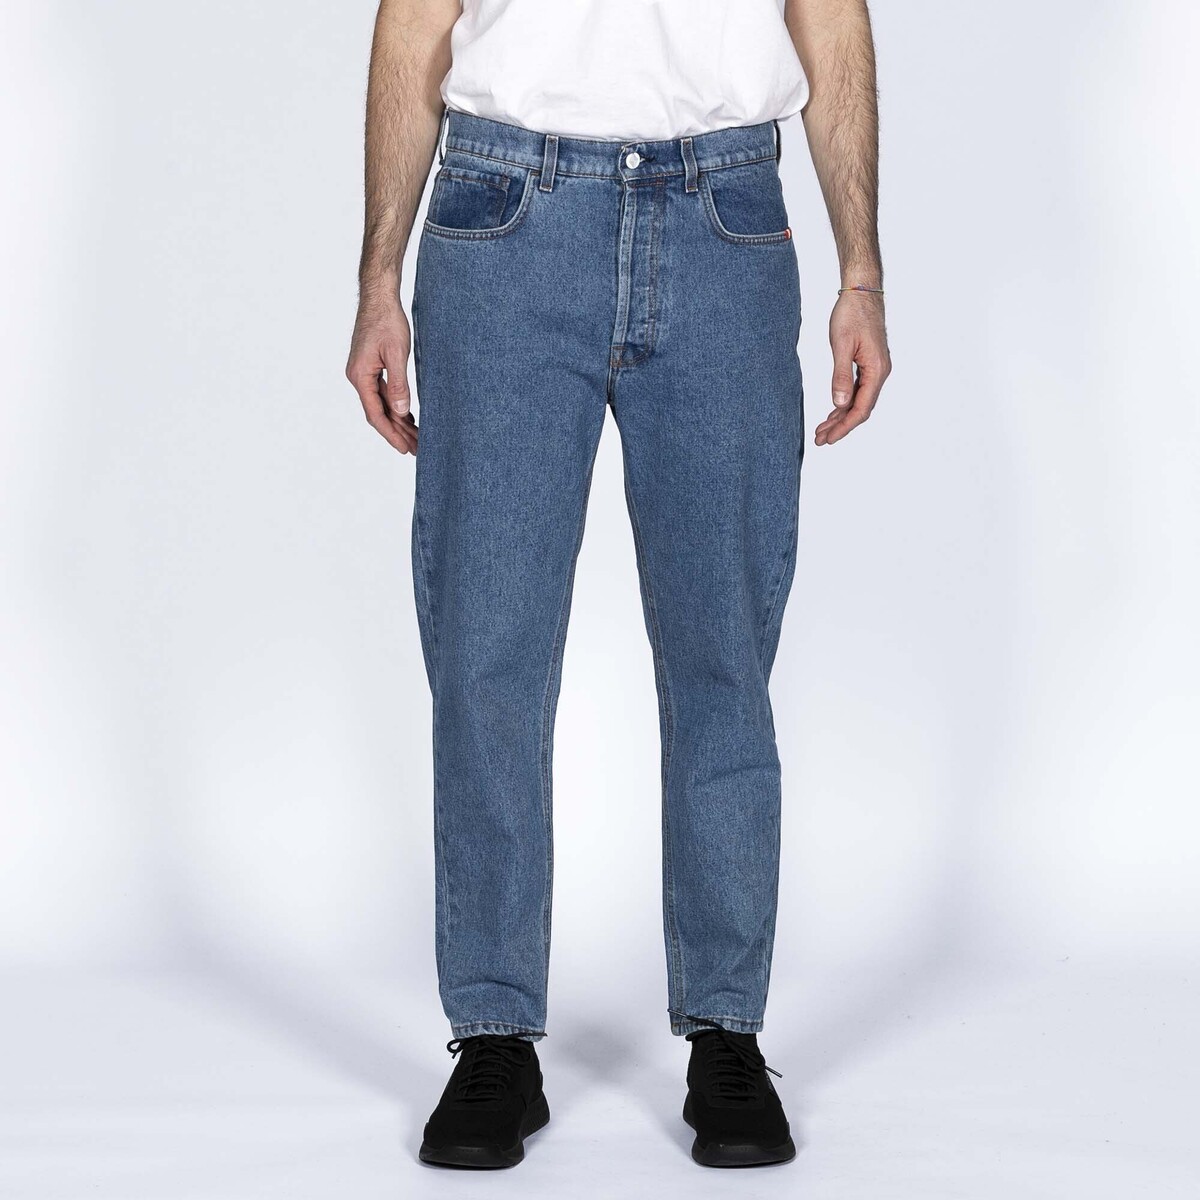 Abbigliamento Uomo Jeans Amish Jeans  Jeremiah Columbus Super Stone Blu Blu